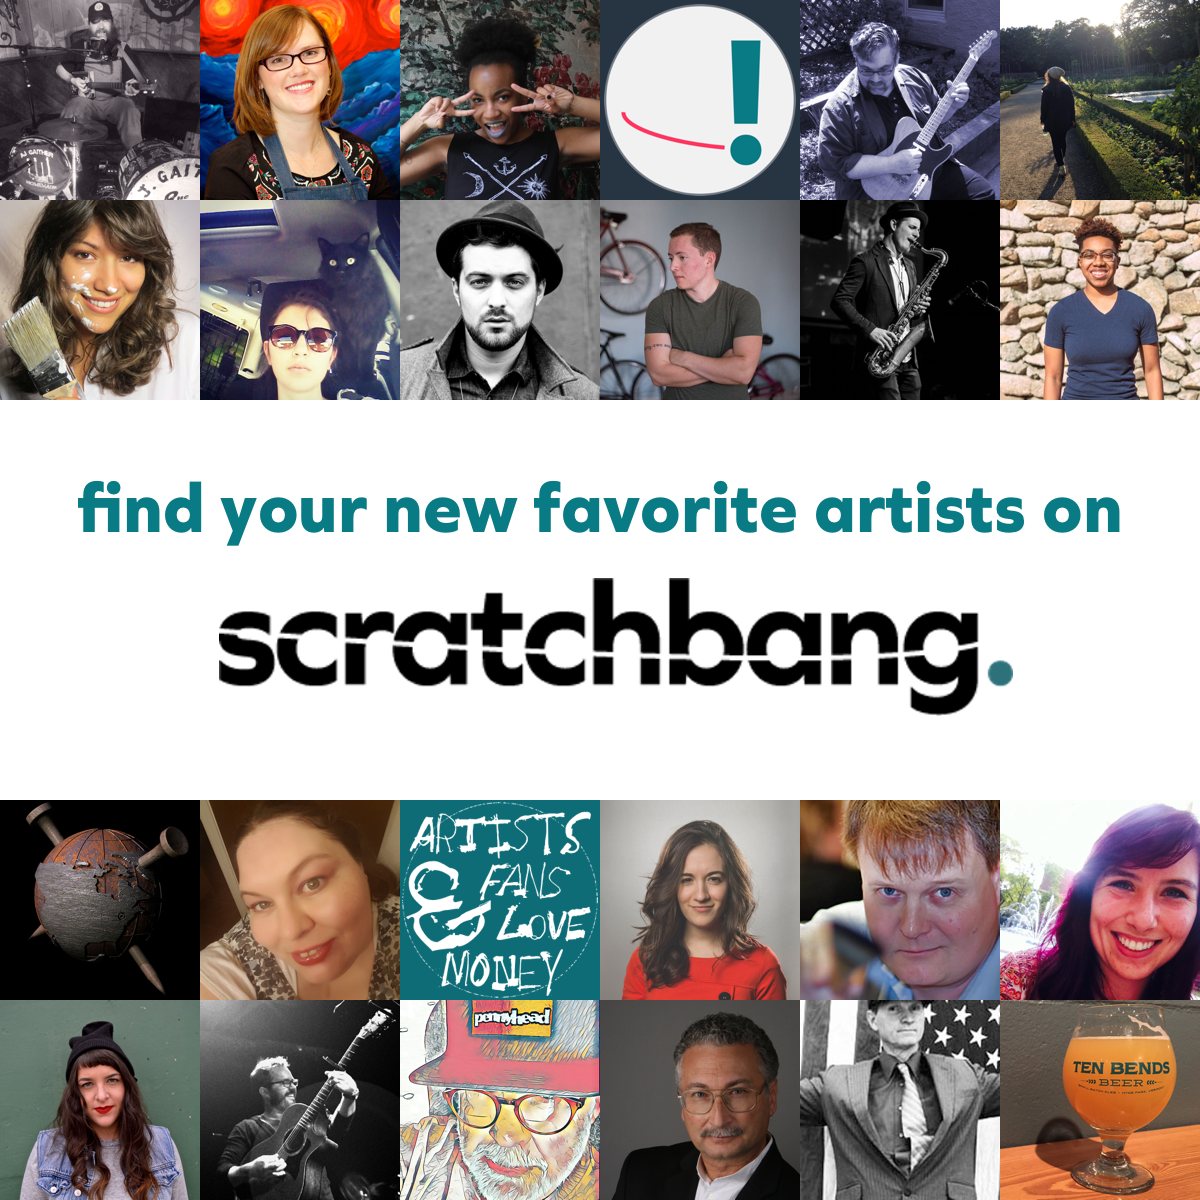 find your new favorite artists on ScratchBang